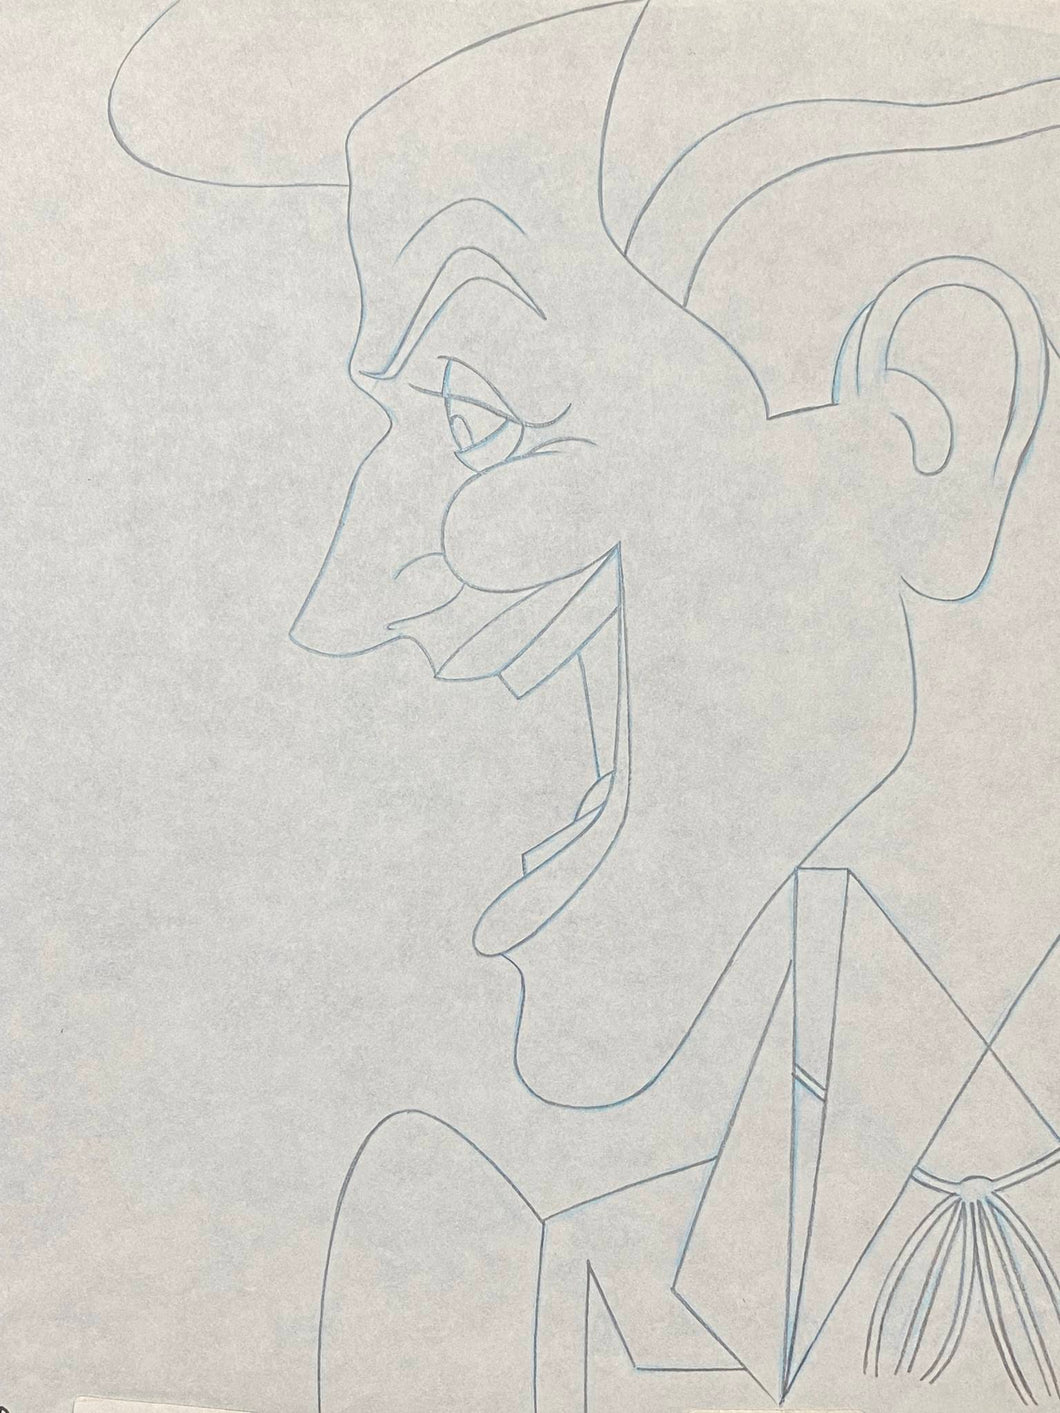 The Adventures of Batman - Original drawing of Joker